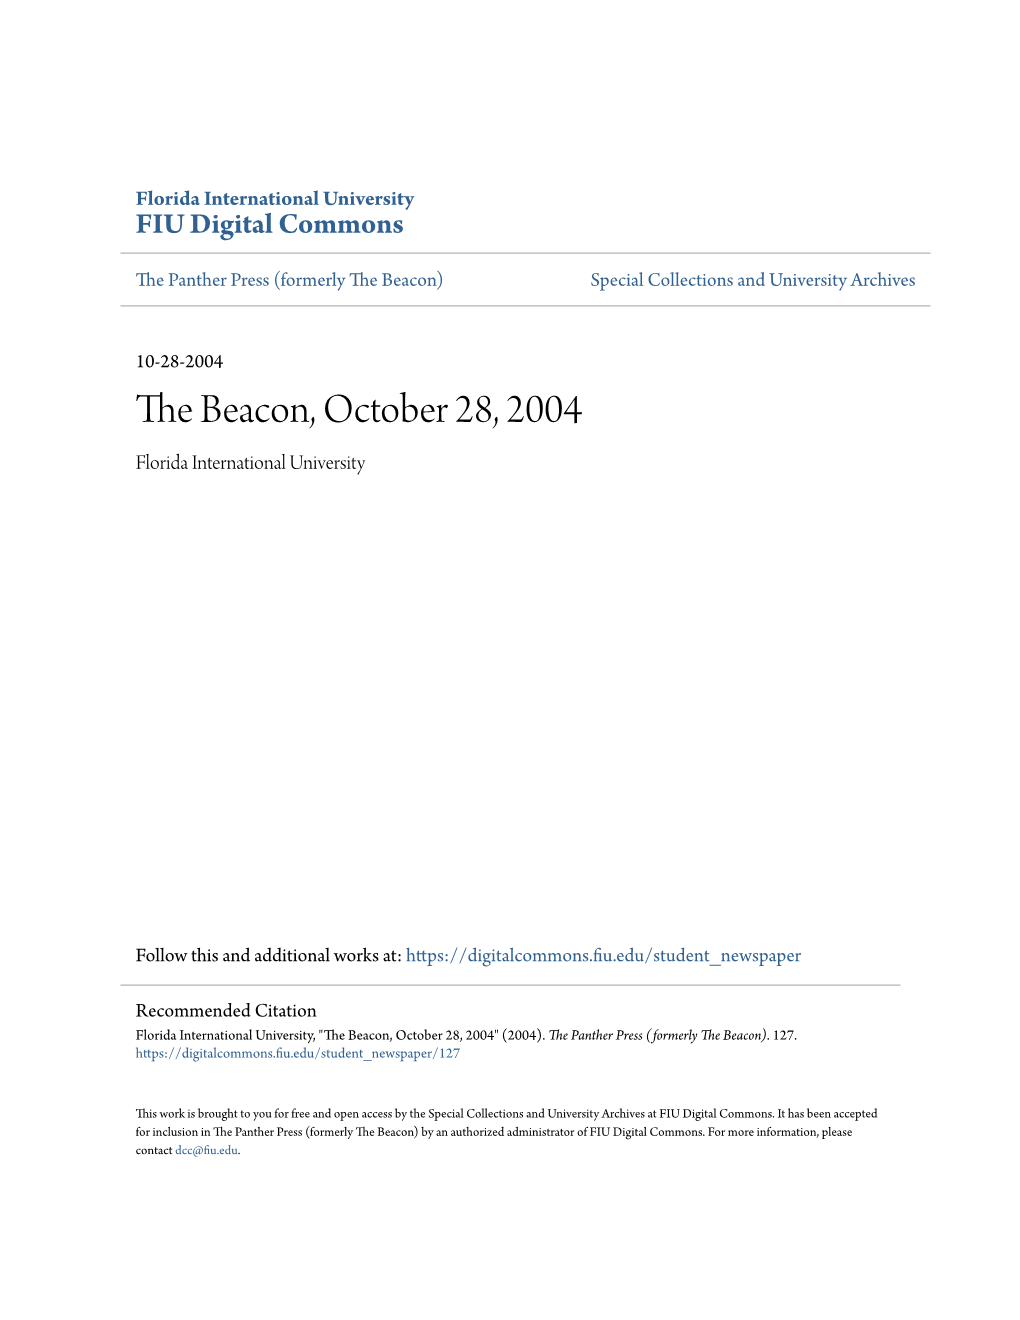 The Beacon, October 28, 2004 Florida International University